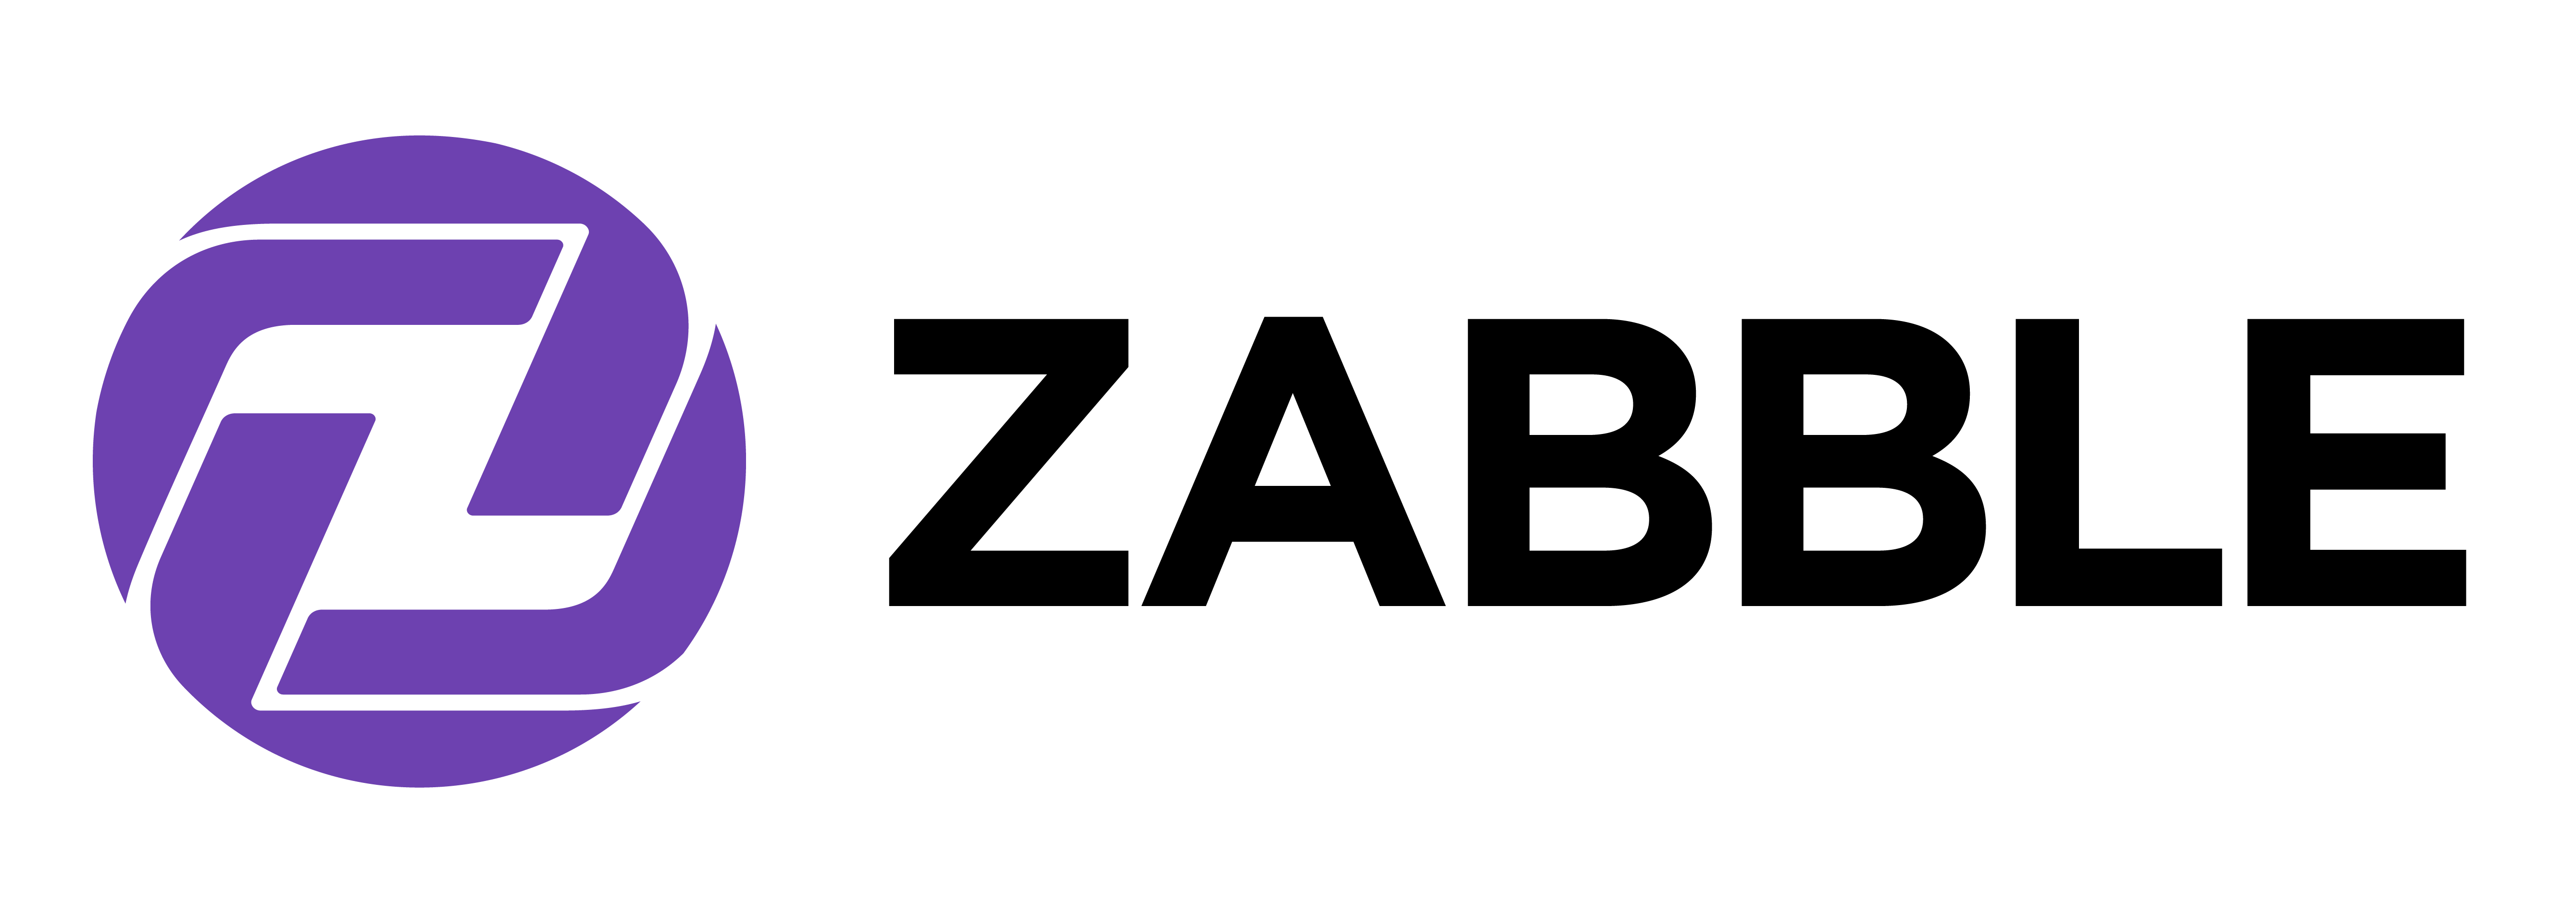 Zabble logo